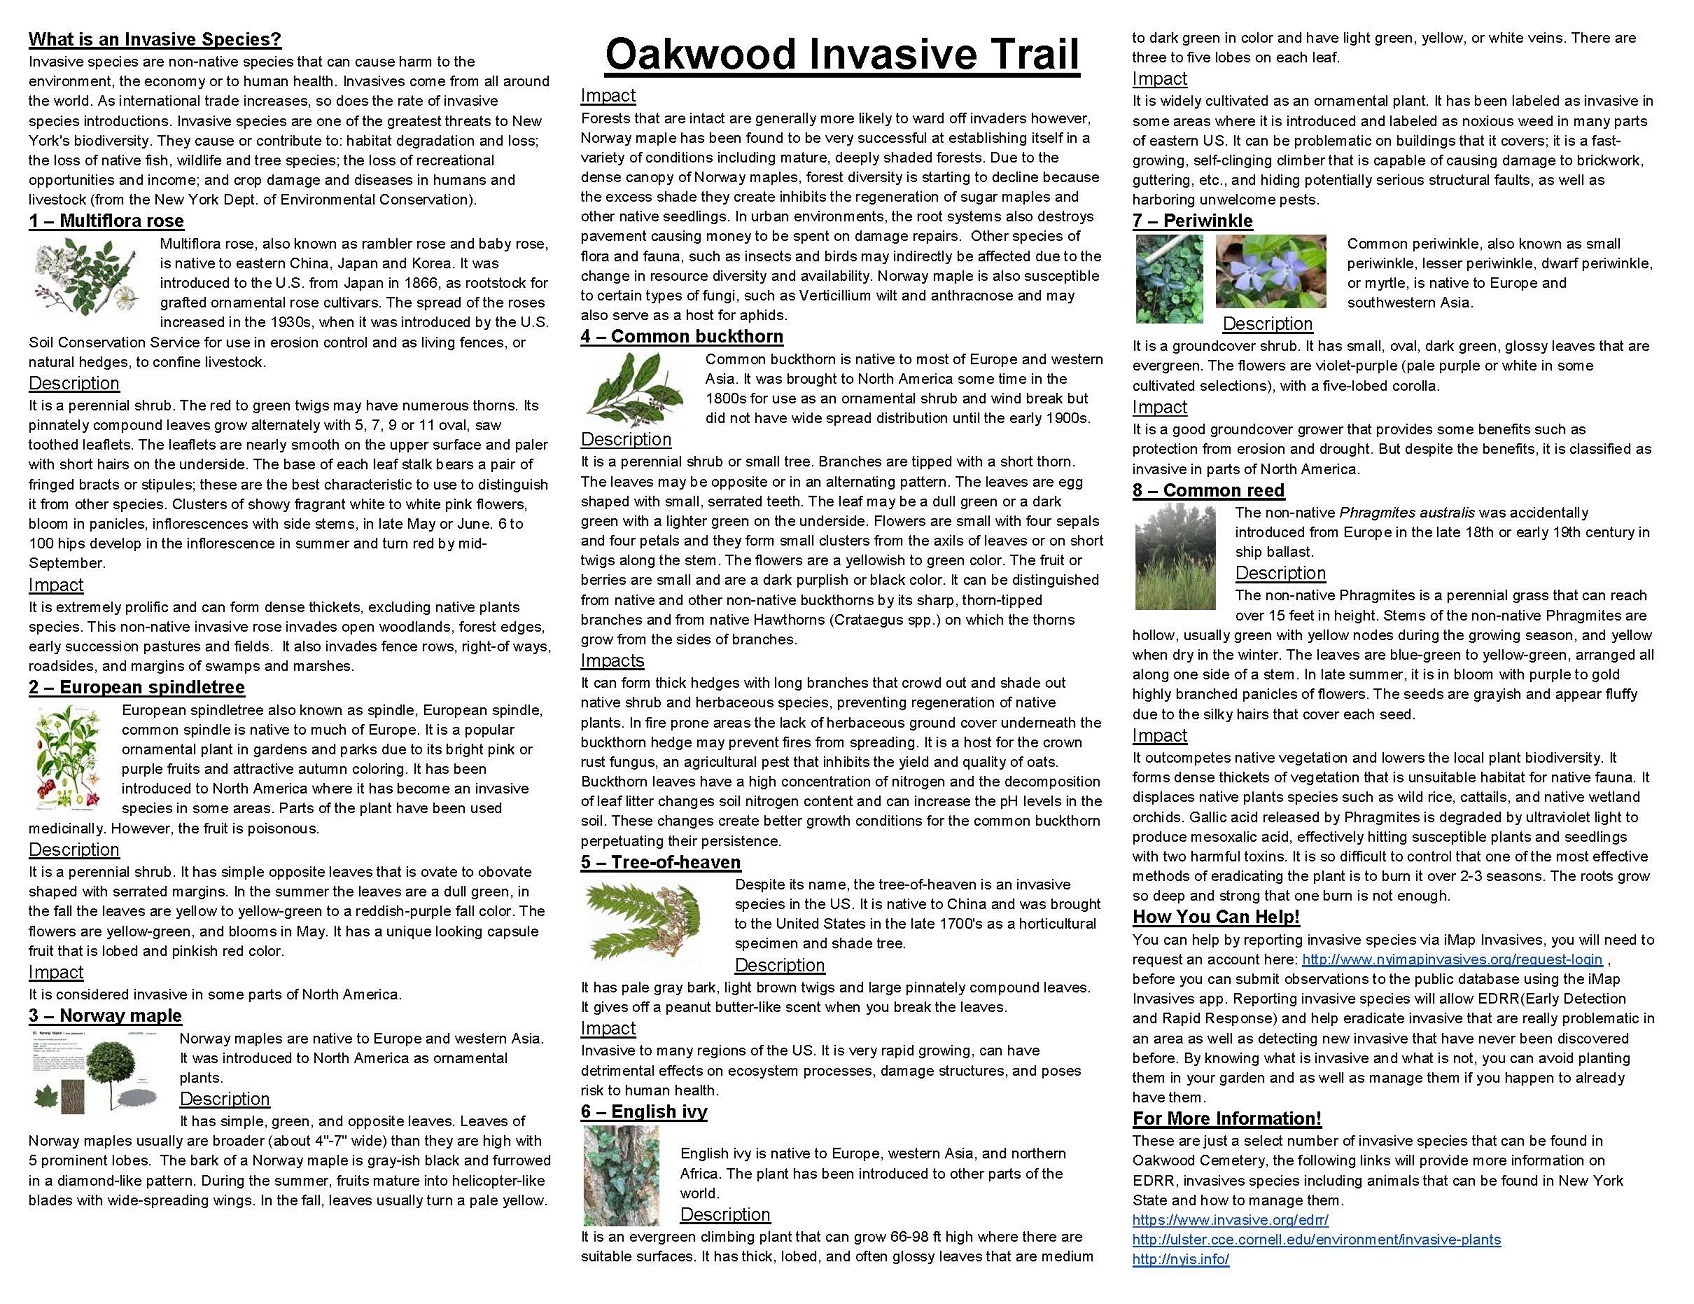 Oakwood Cemetery Invasive Trail description